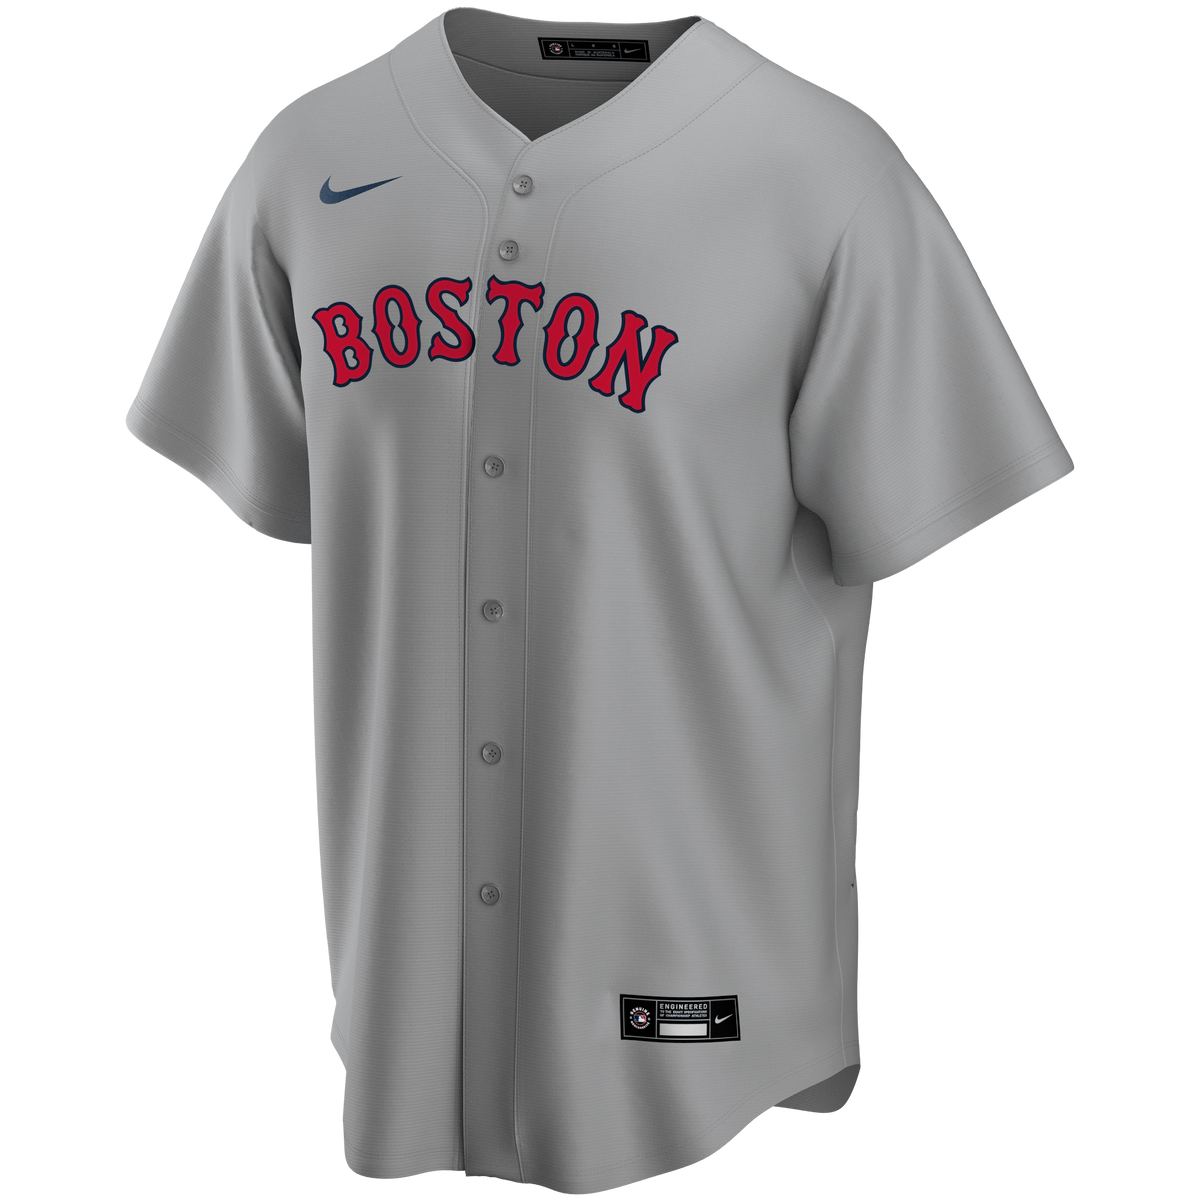 Men's Nike Carl Yastrzemski Boston Red Sox Cooperstown